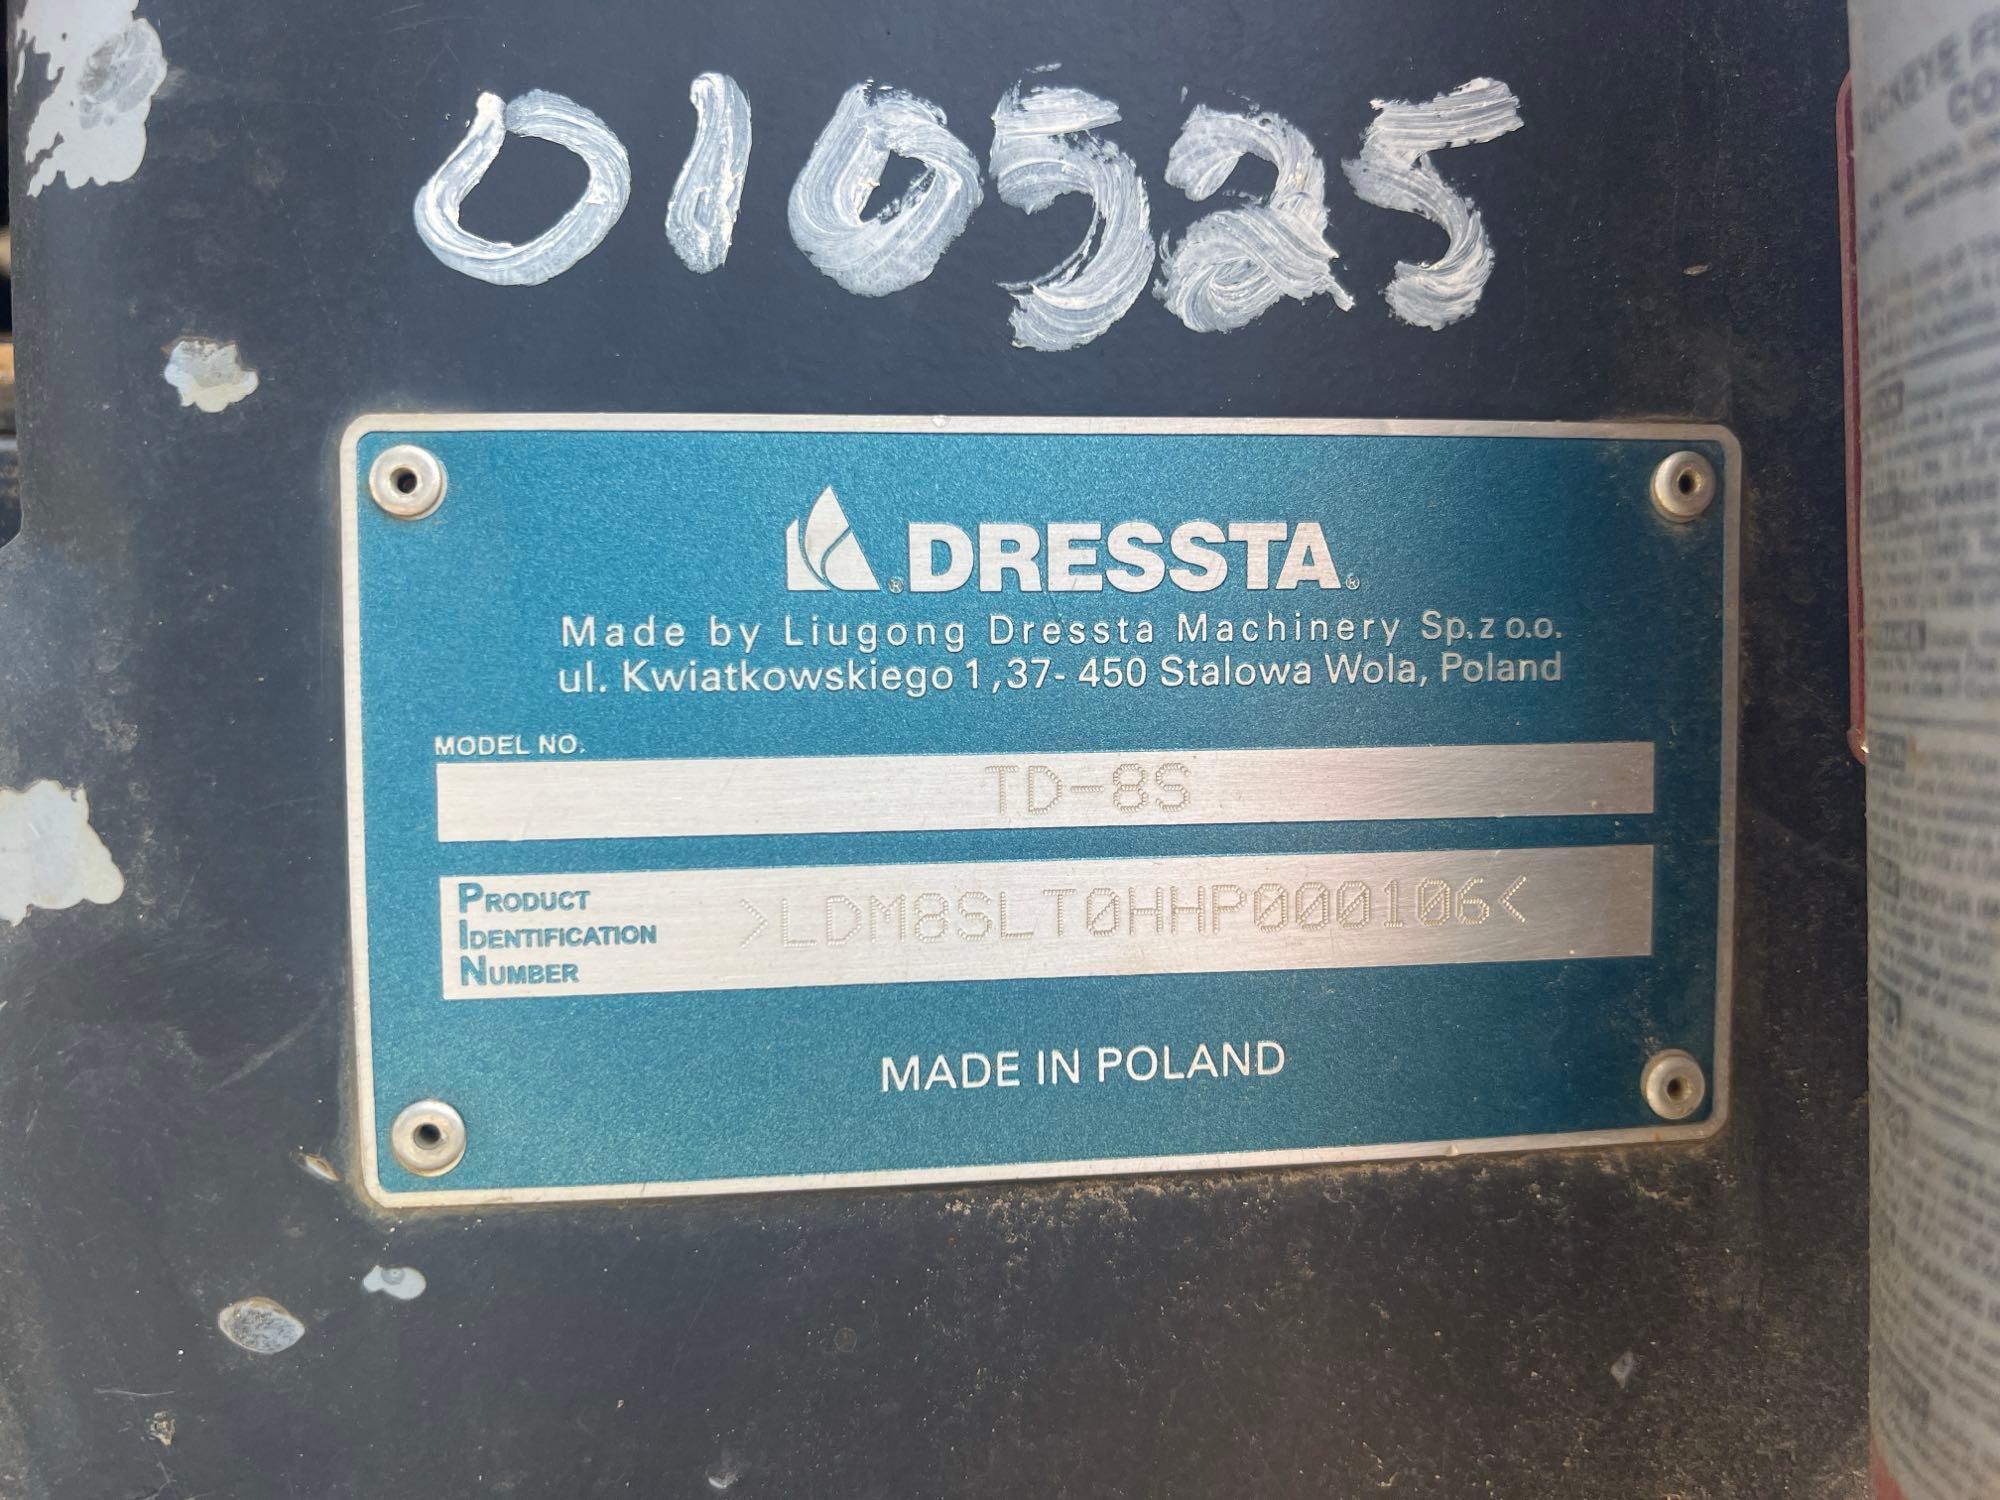 2019 DRESSTA TD-8S CRAWLER DOZER